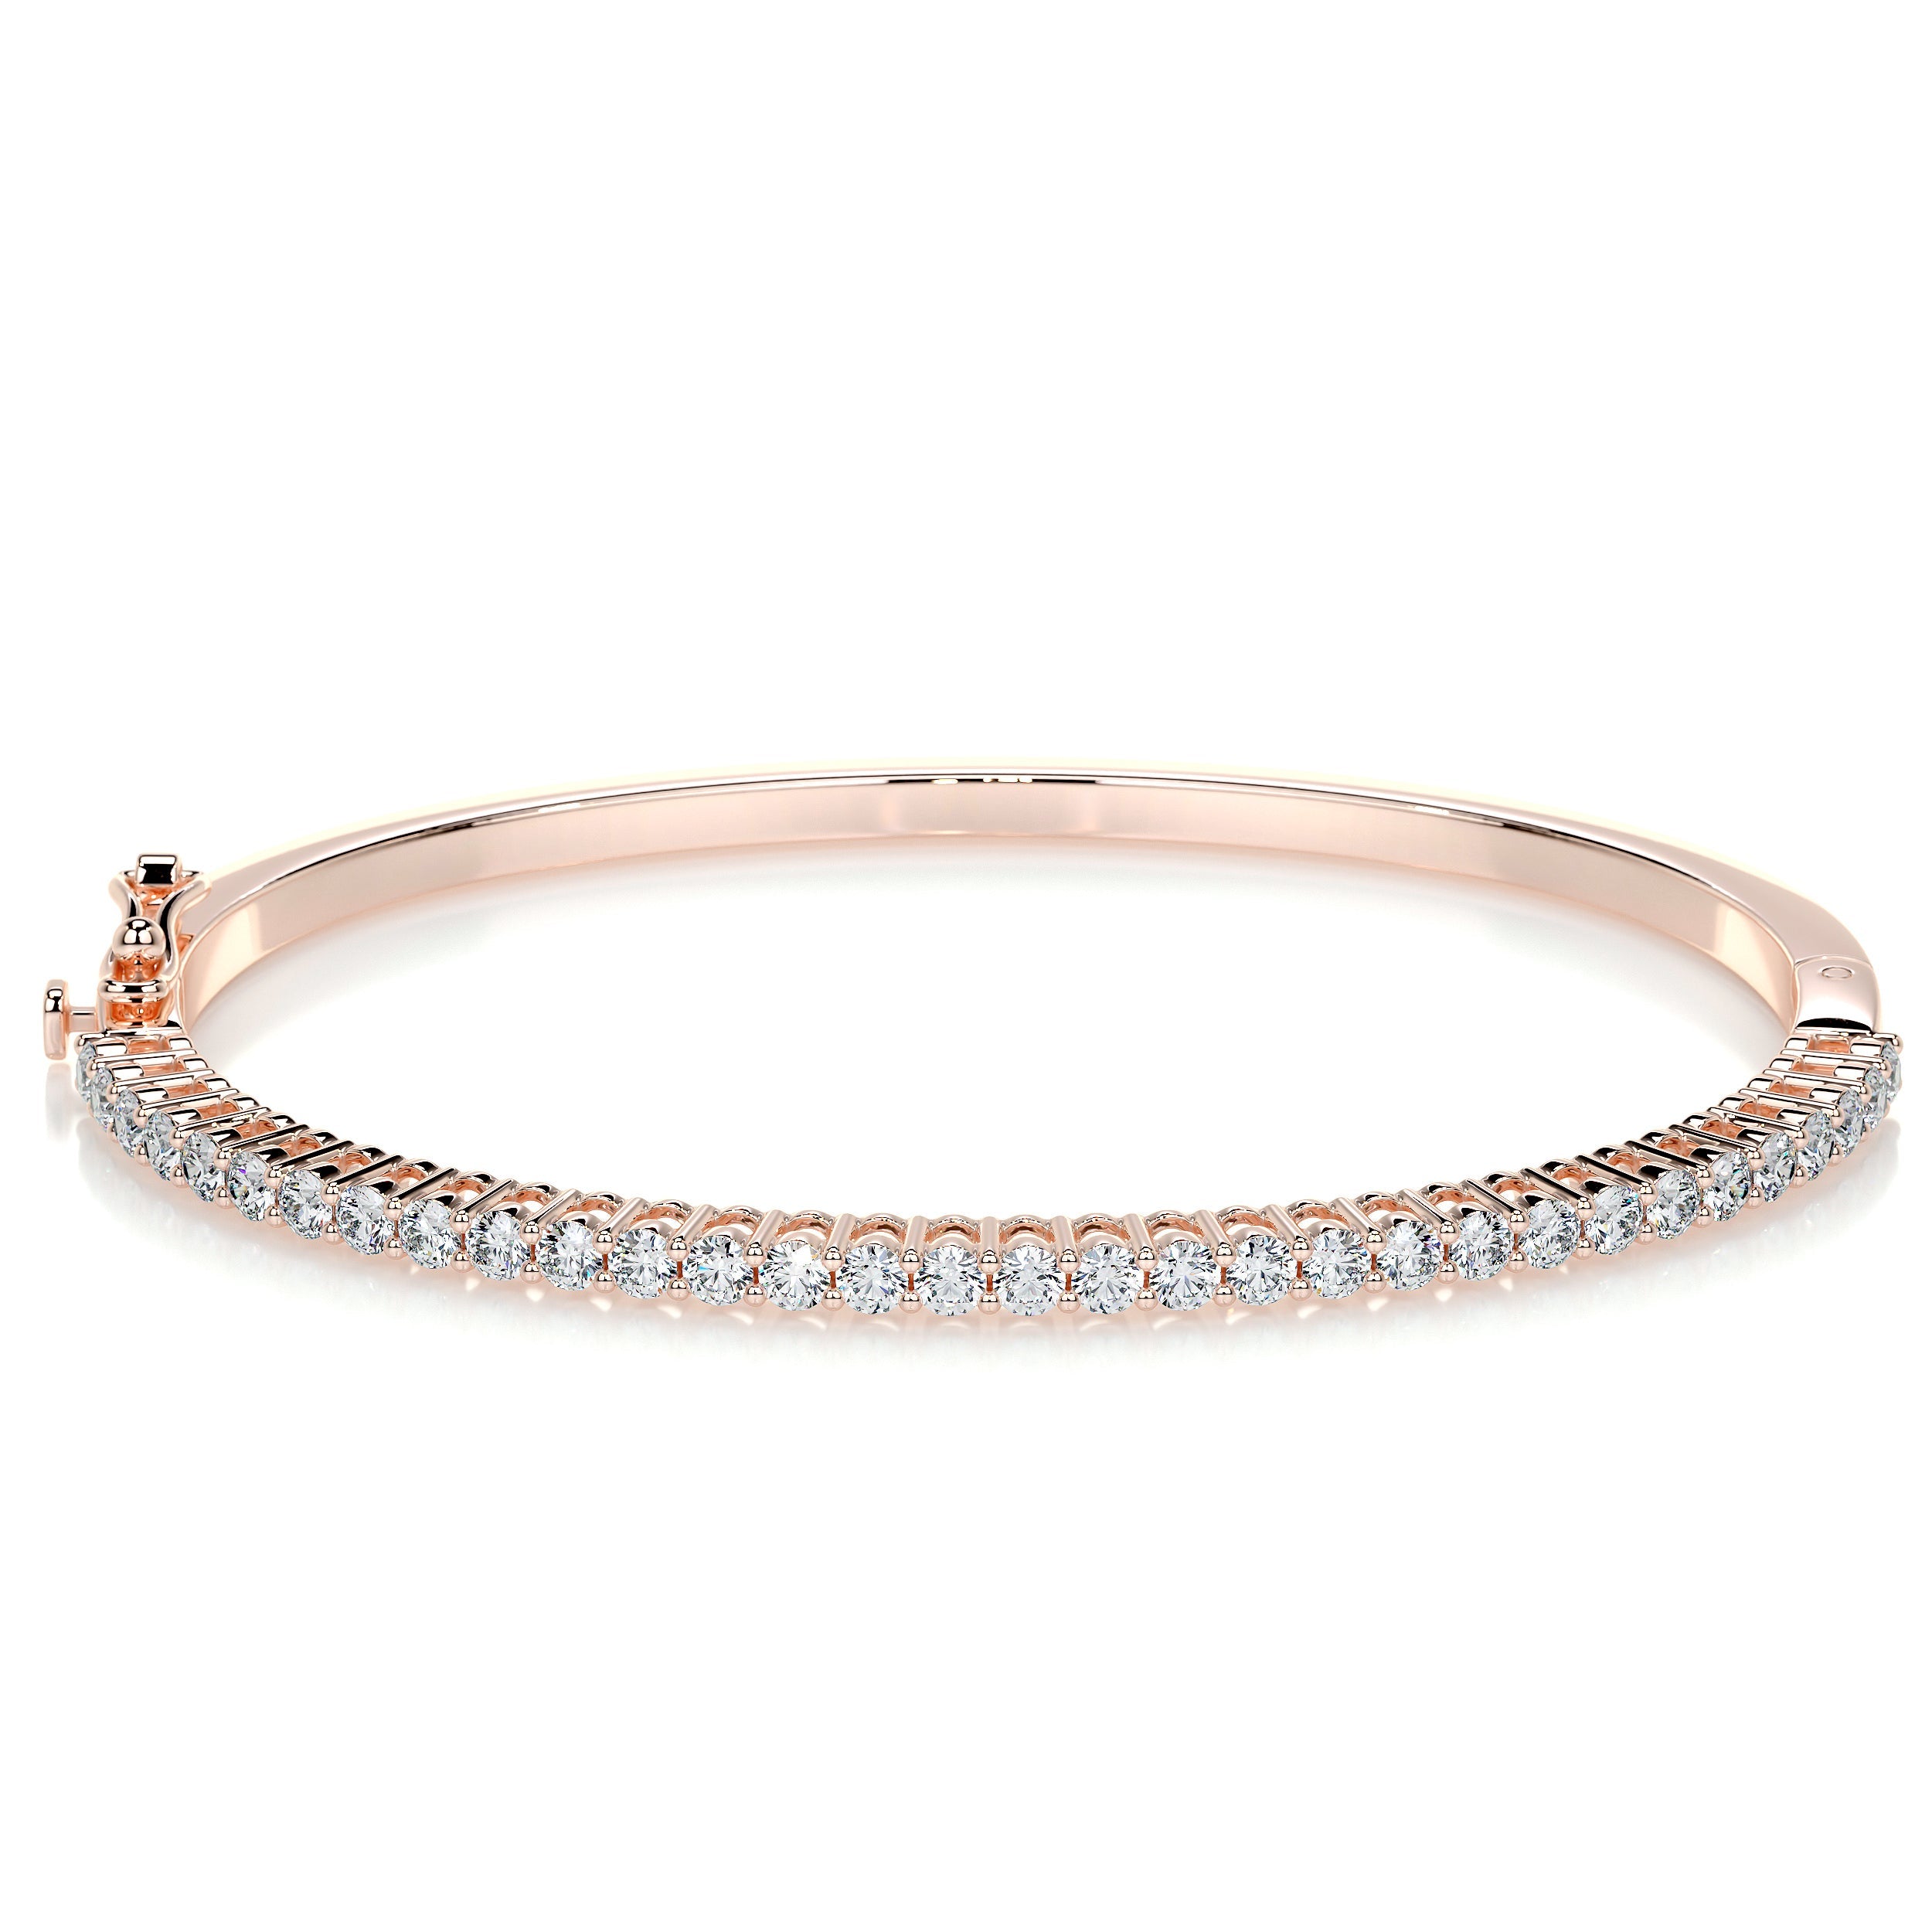 Karla Bangle Lab Grown Diamond Bracelet   (1.6 Carat) -14K Rose Gold